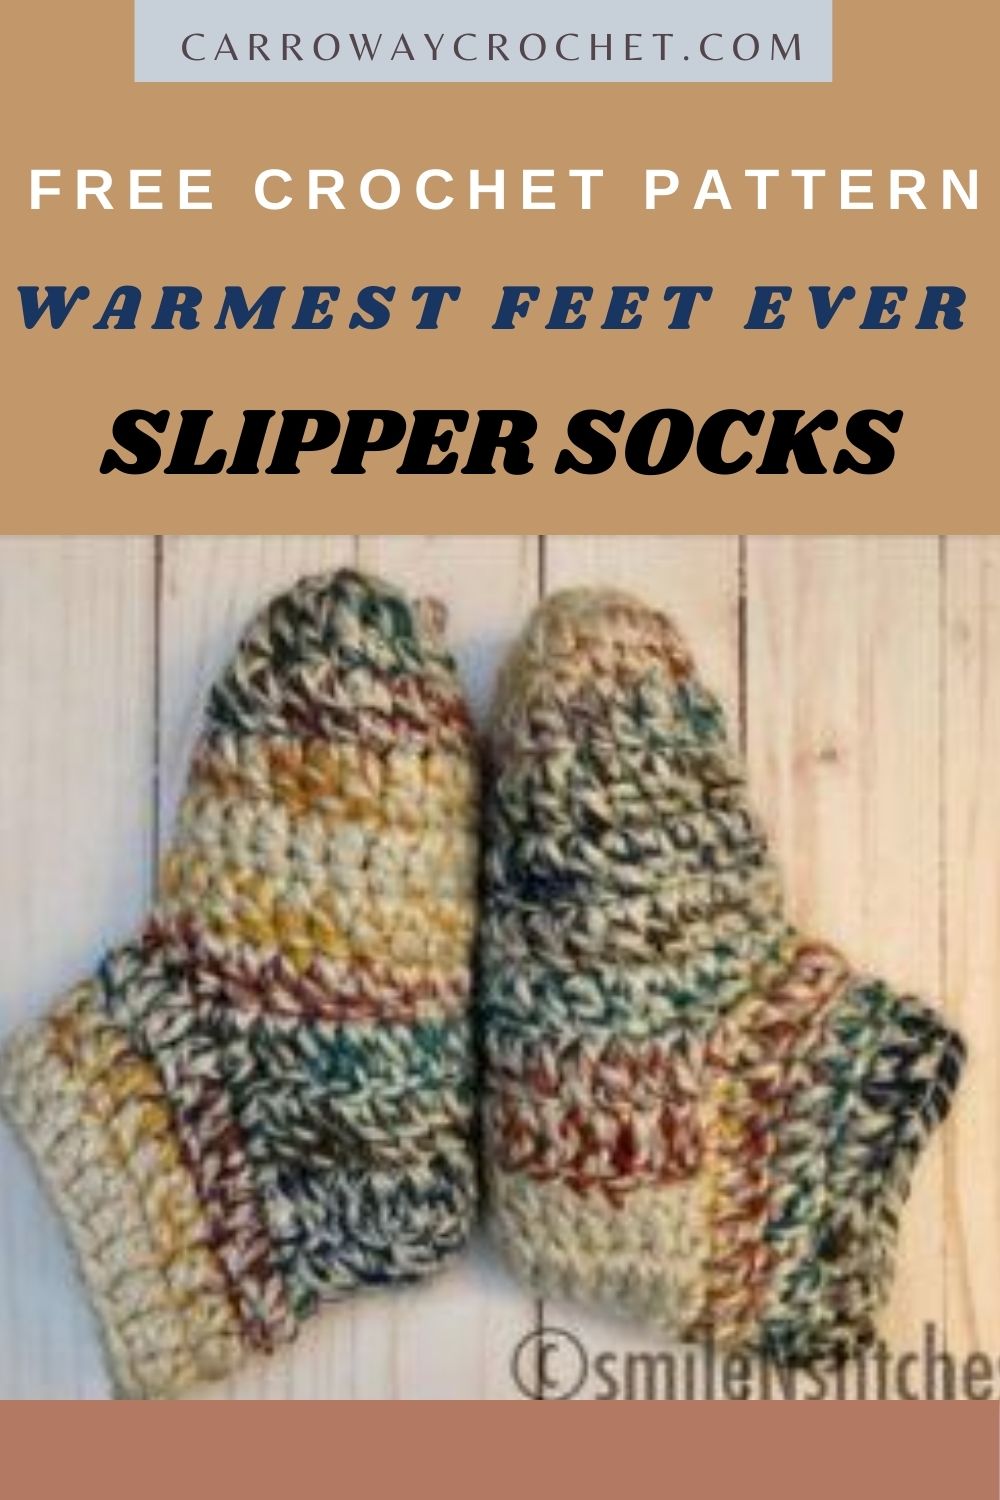 slipper socks pattern